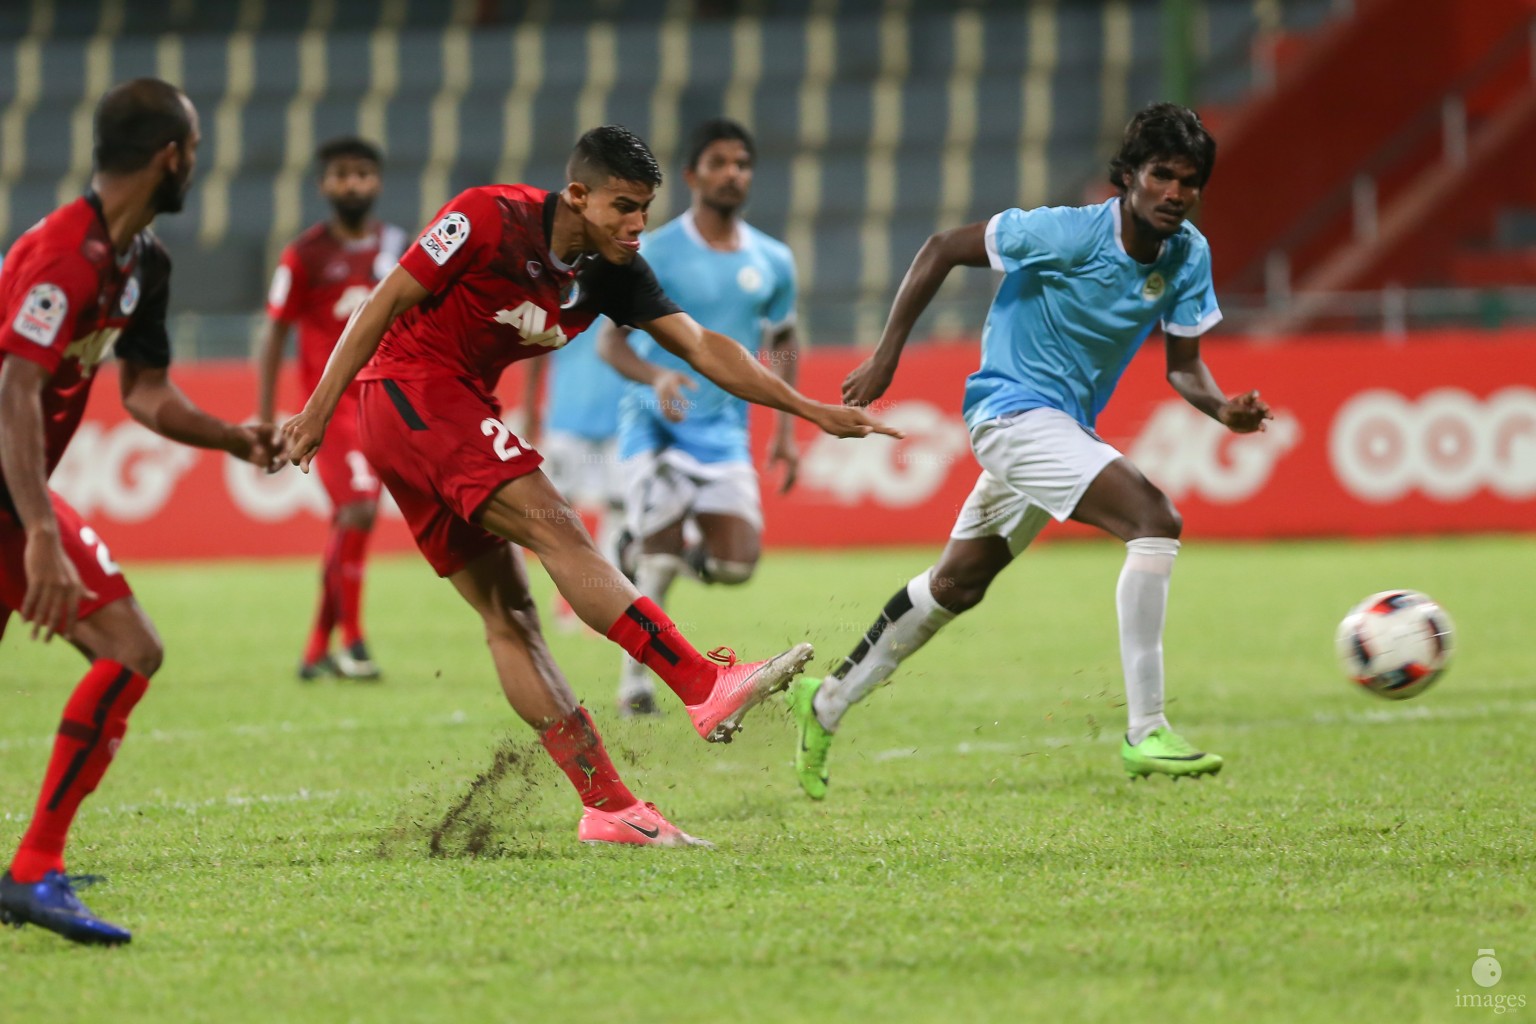 Ooredoo Dhivehi Premier League 2017, Milandhoo FC vs Thinadhoo FT 17th September 2017, Male , Maldives. Sunday (images.mv Photos /Abdulla Abeedh)